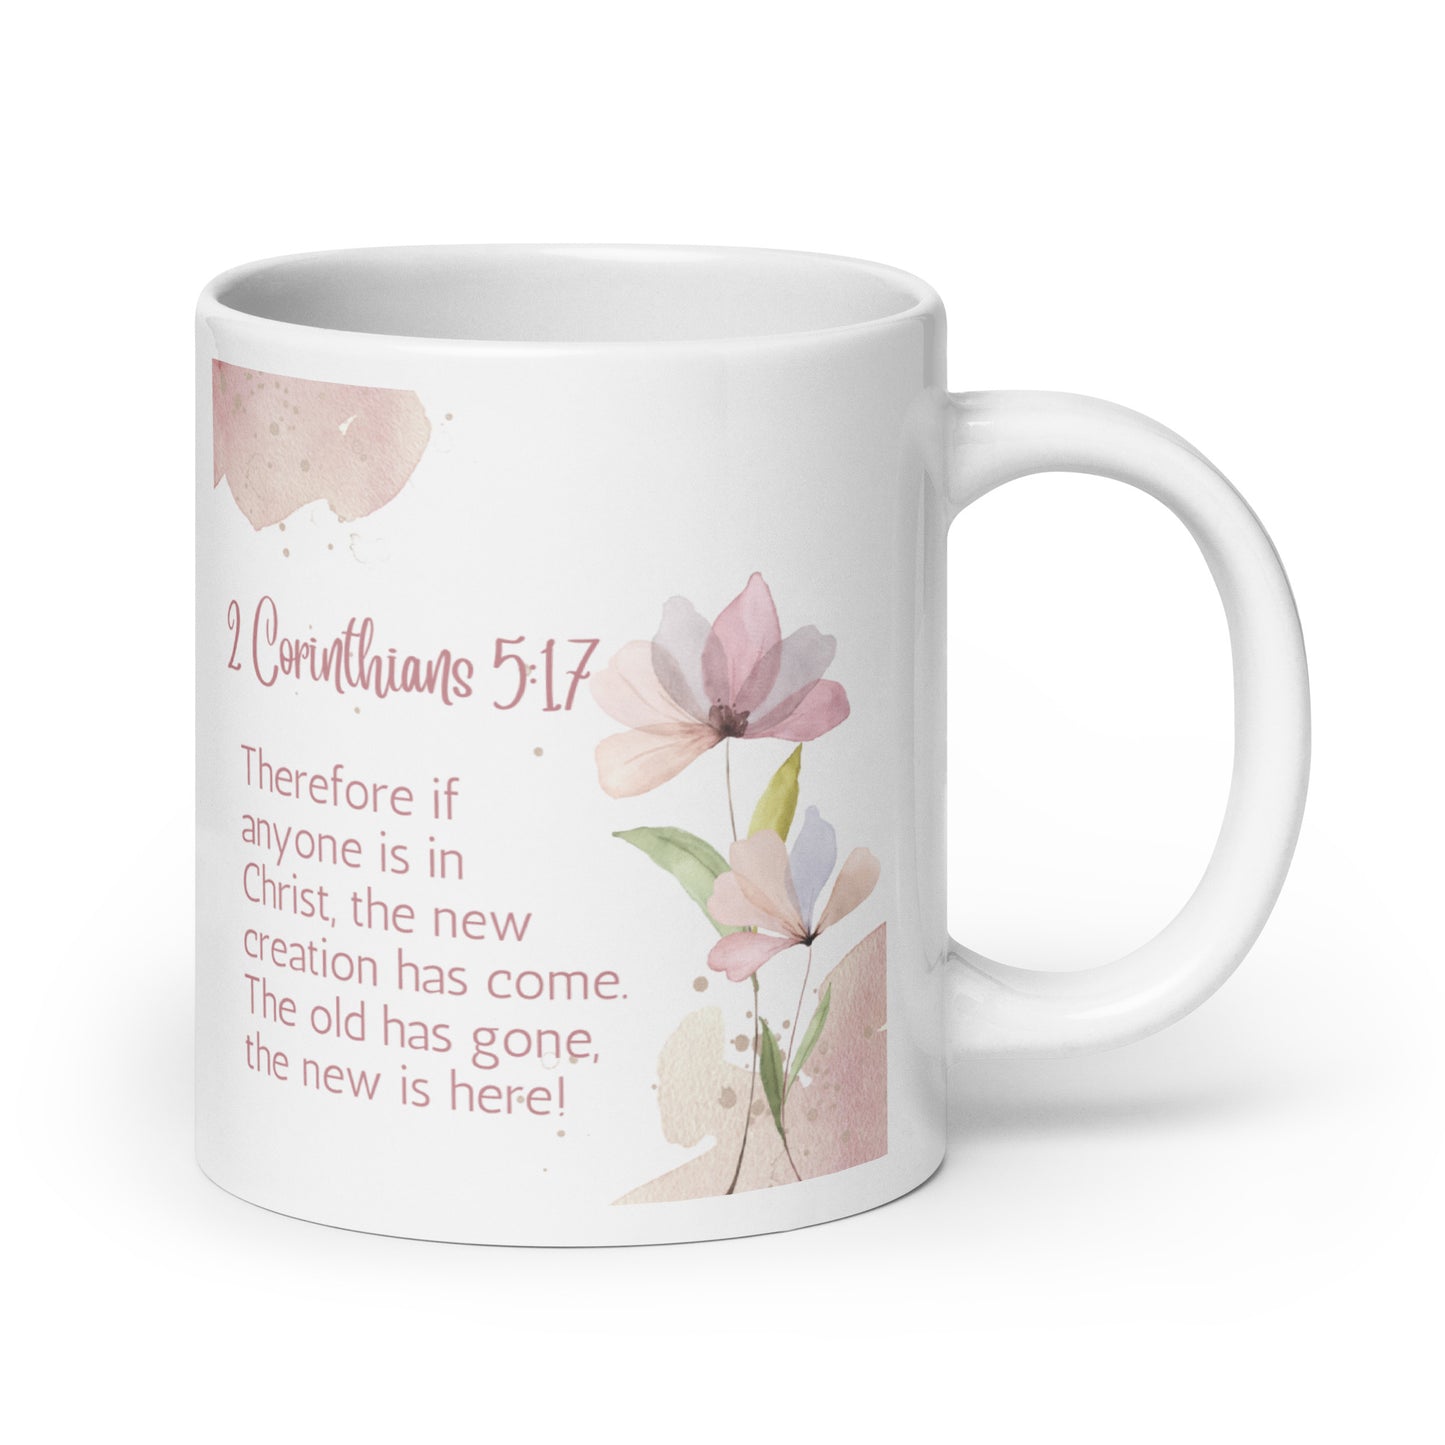 2 Corinthians 5:17 White glossy mug